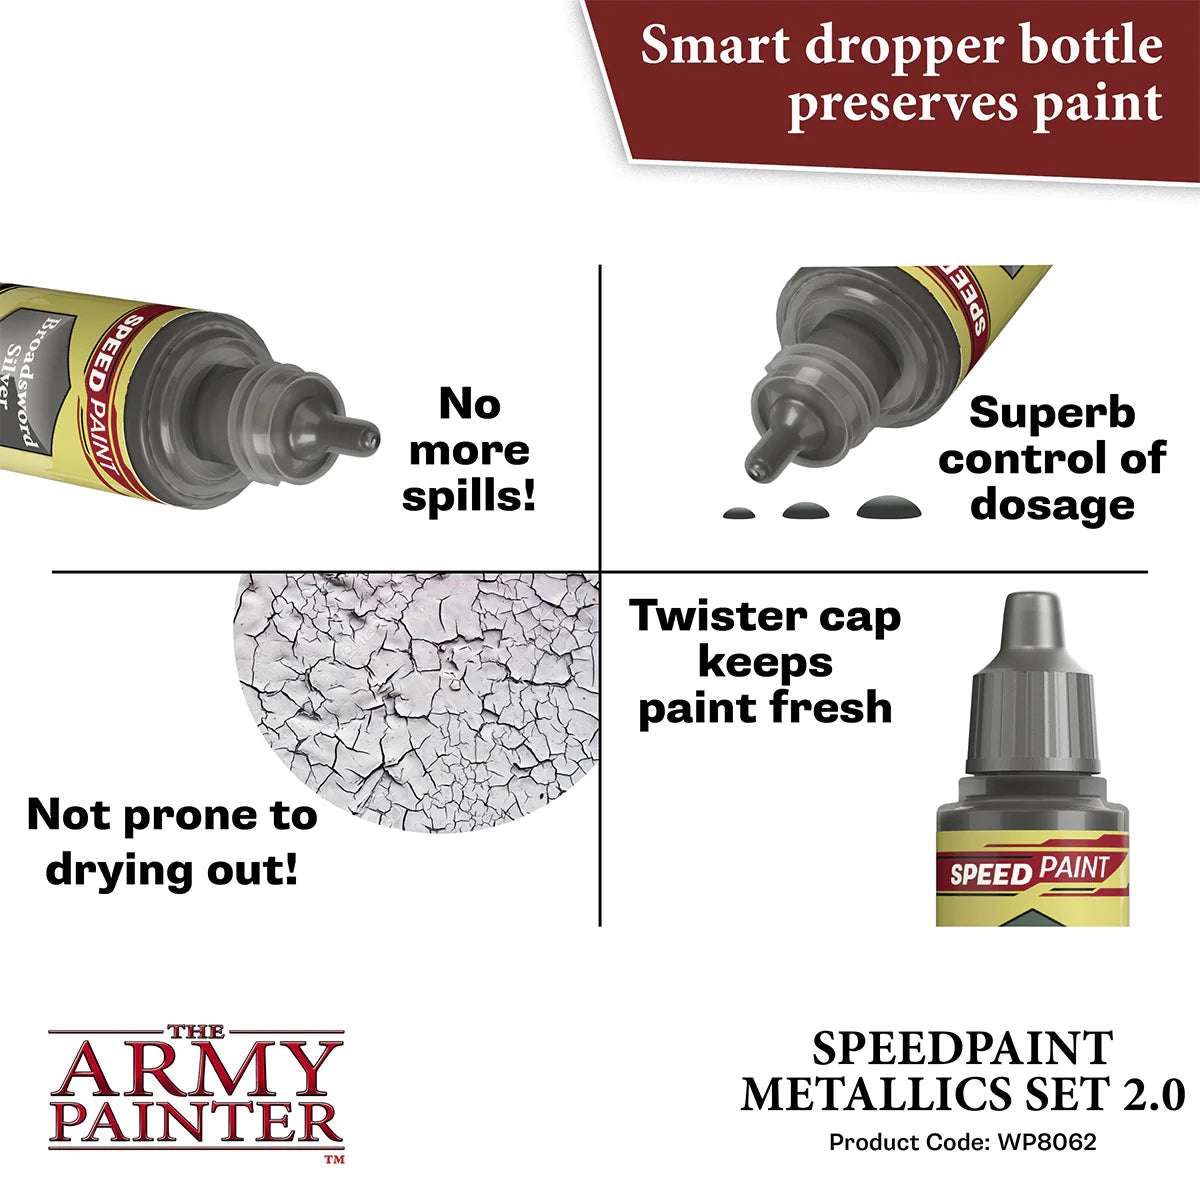 The Army Painter - Speedpaint Metallics Set 2.0